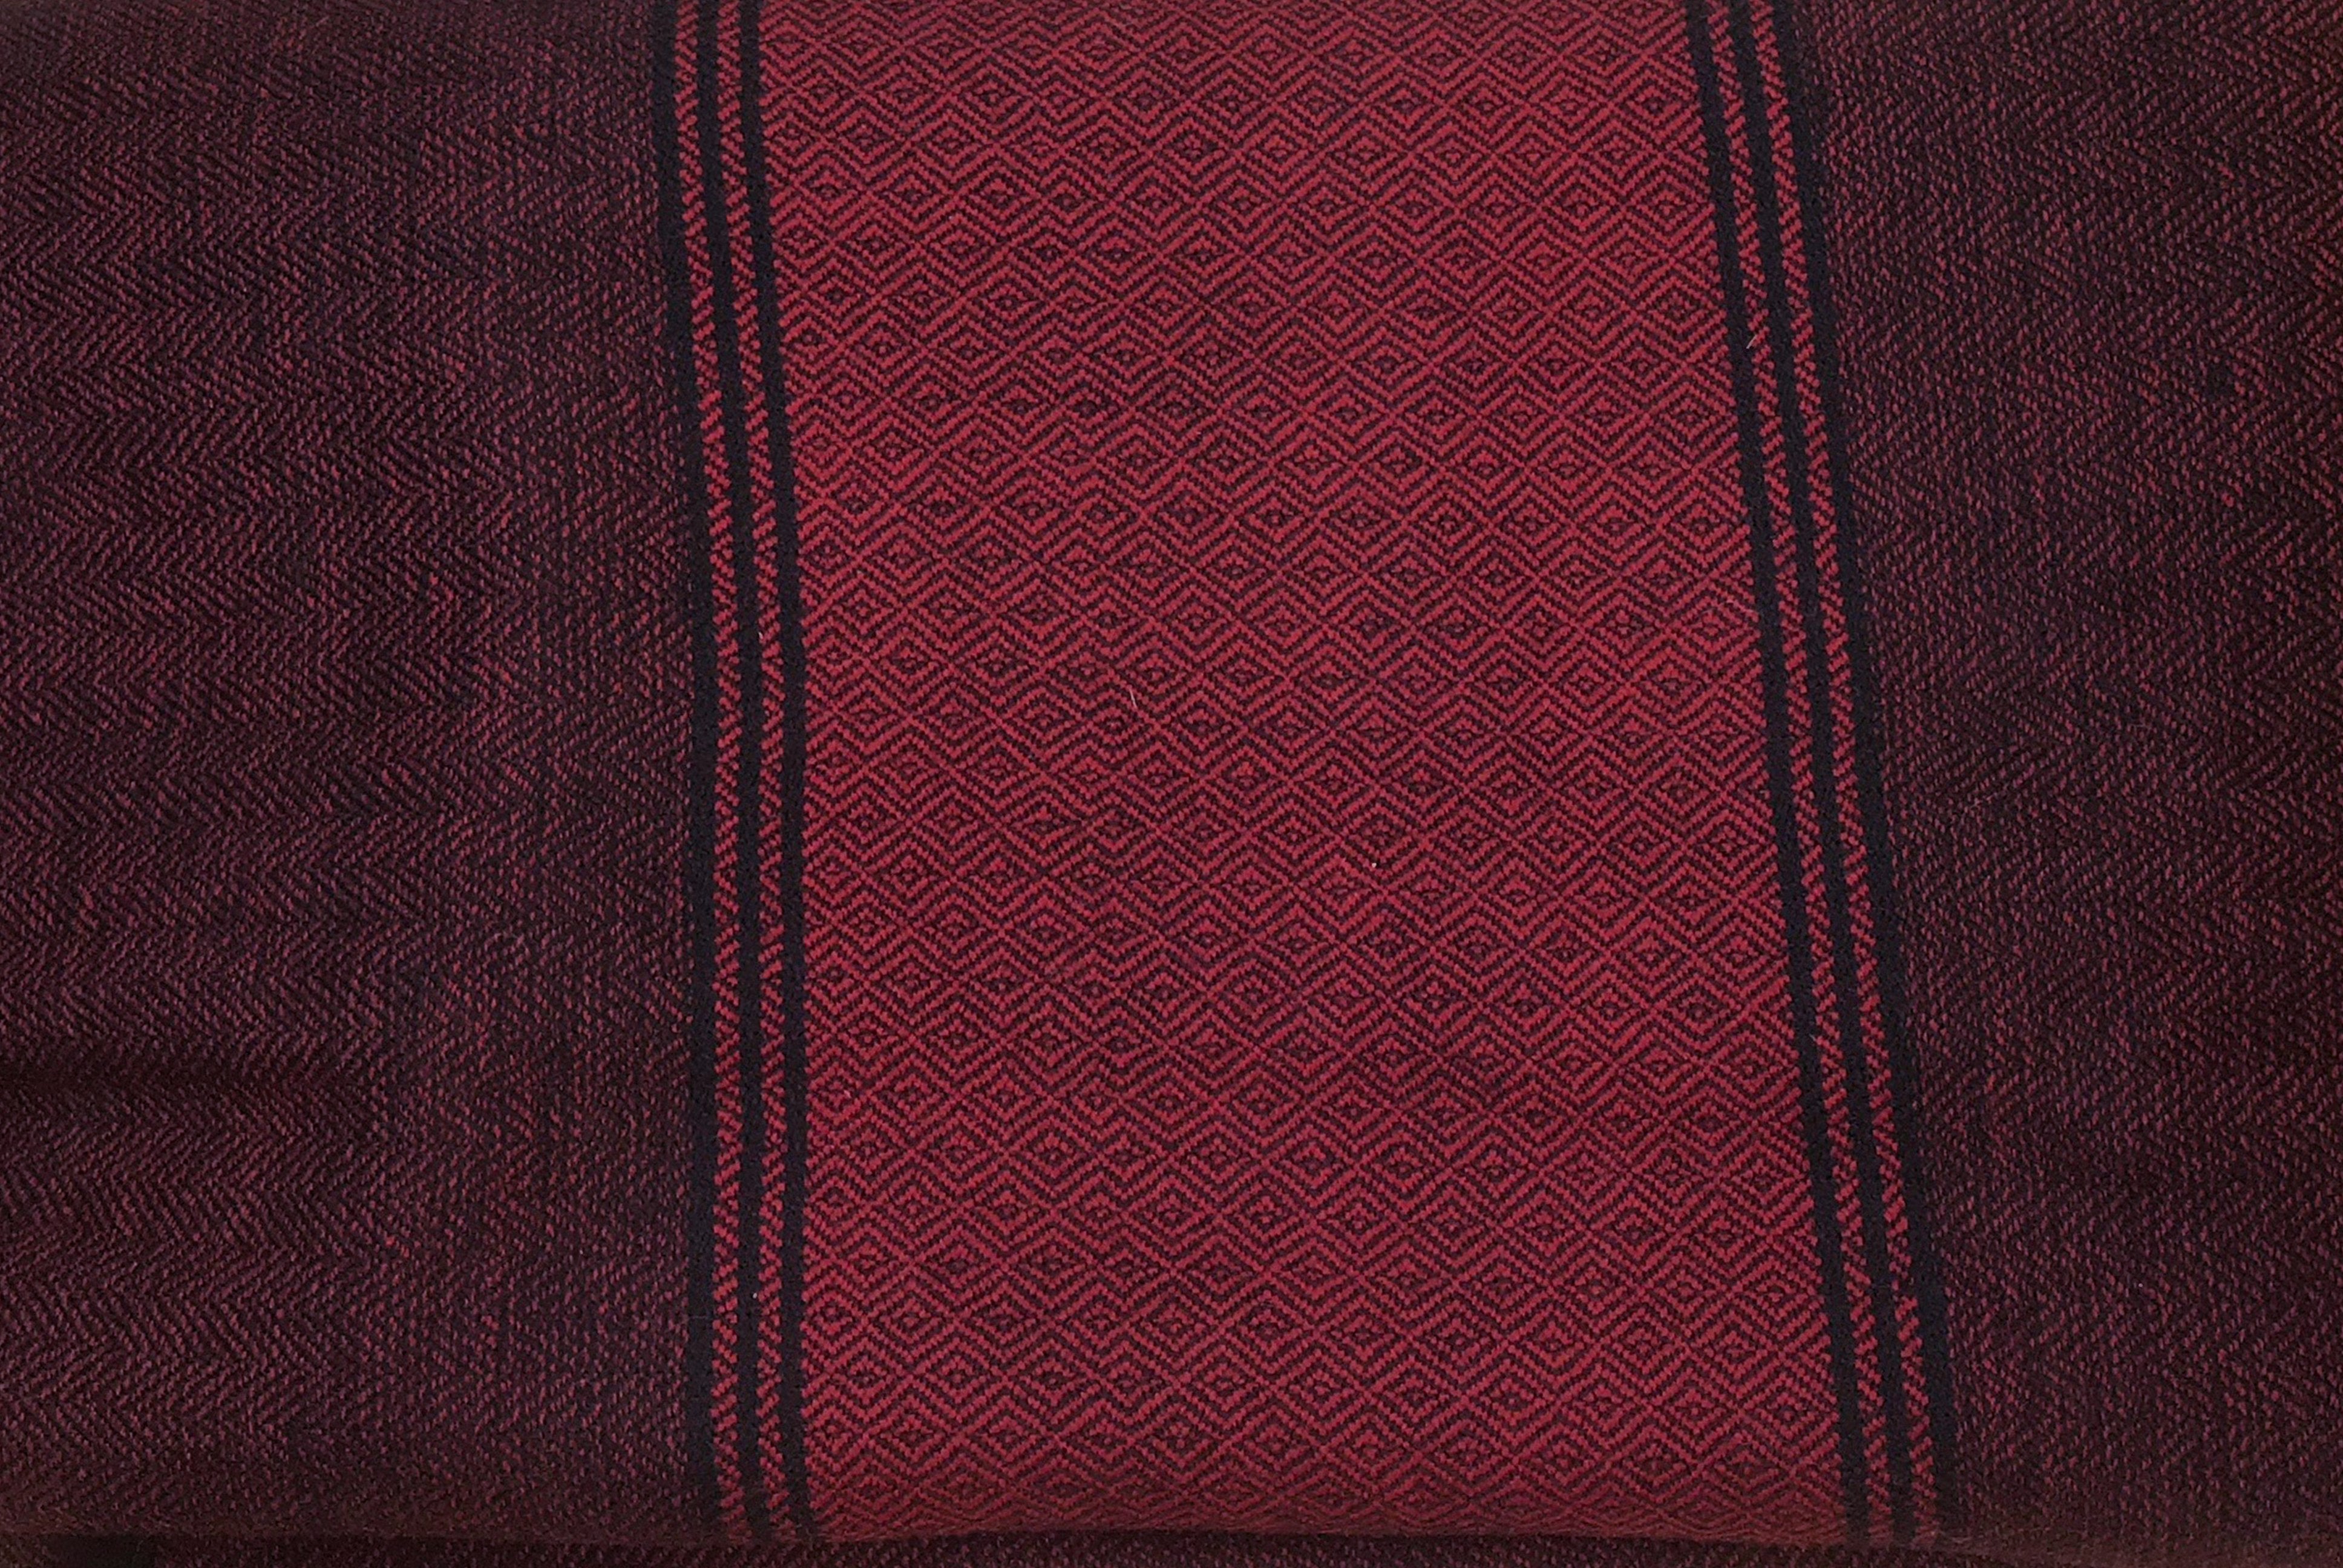 Milarepa Buddhist Shawl | Large Woolen Prayer Shawl | Burgundy Red |  Esprit de l'Himalaya-20